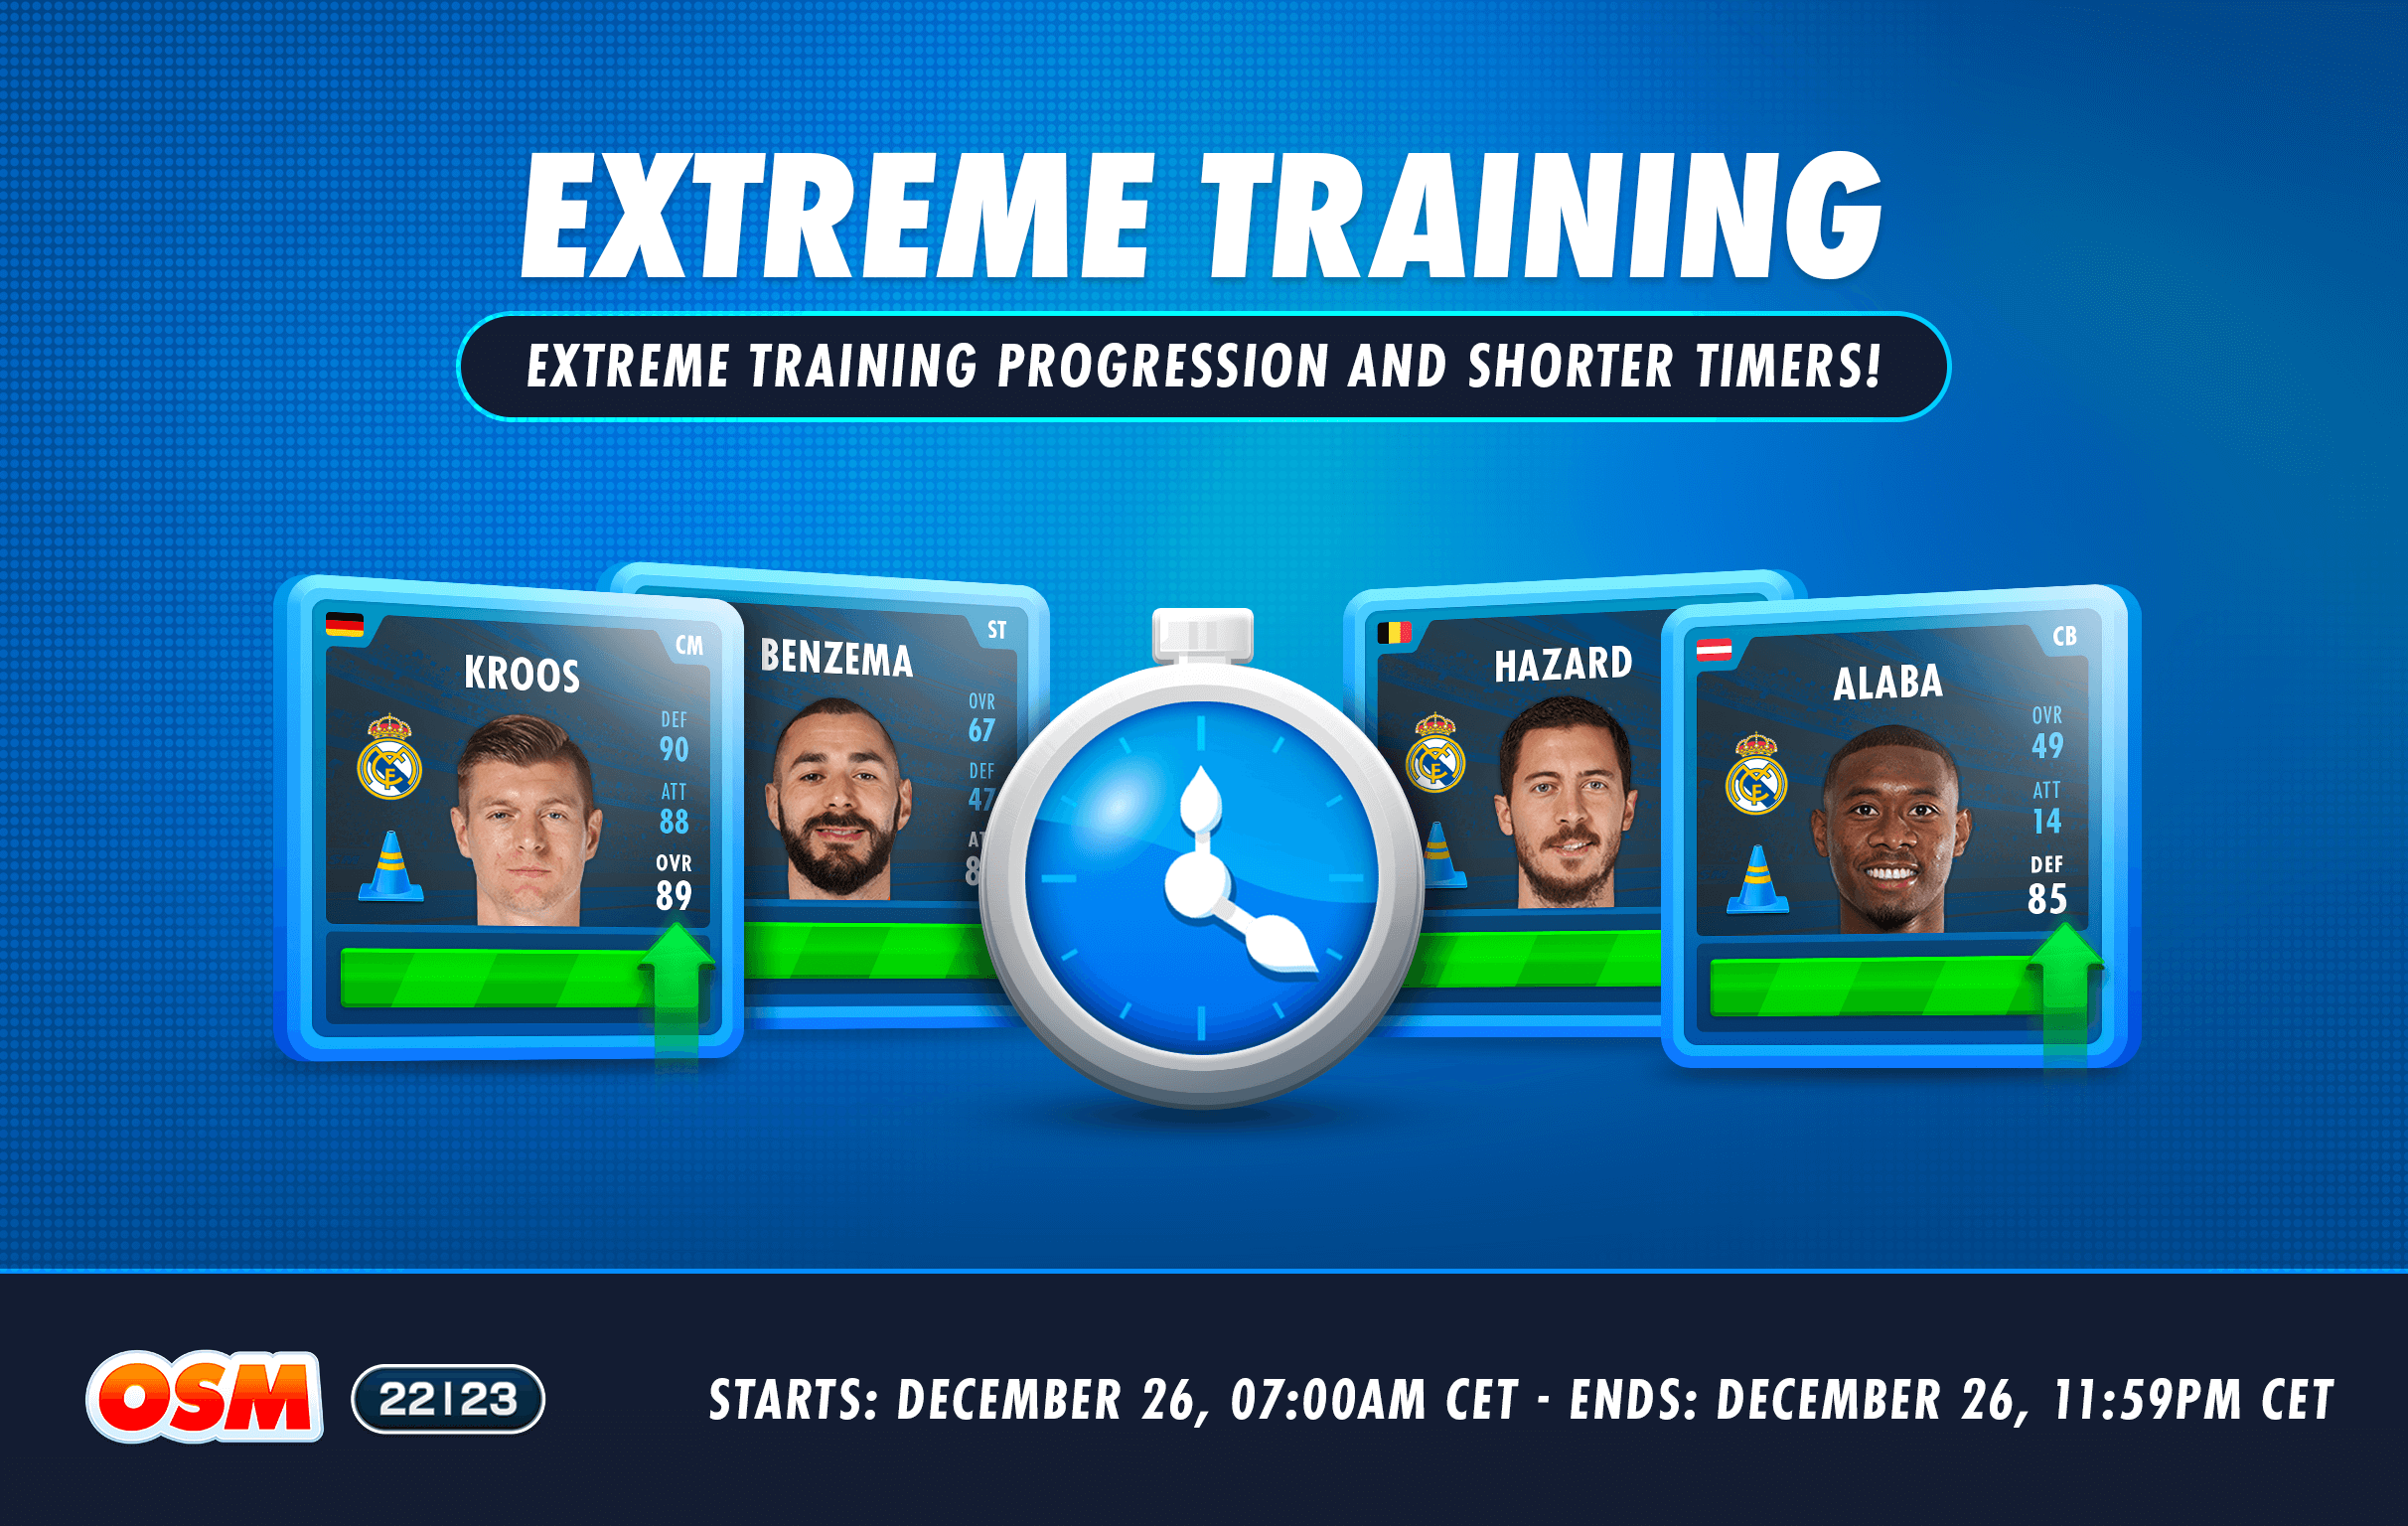 Forum_22-23 Extreme Training_REDDIT (2).png